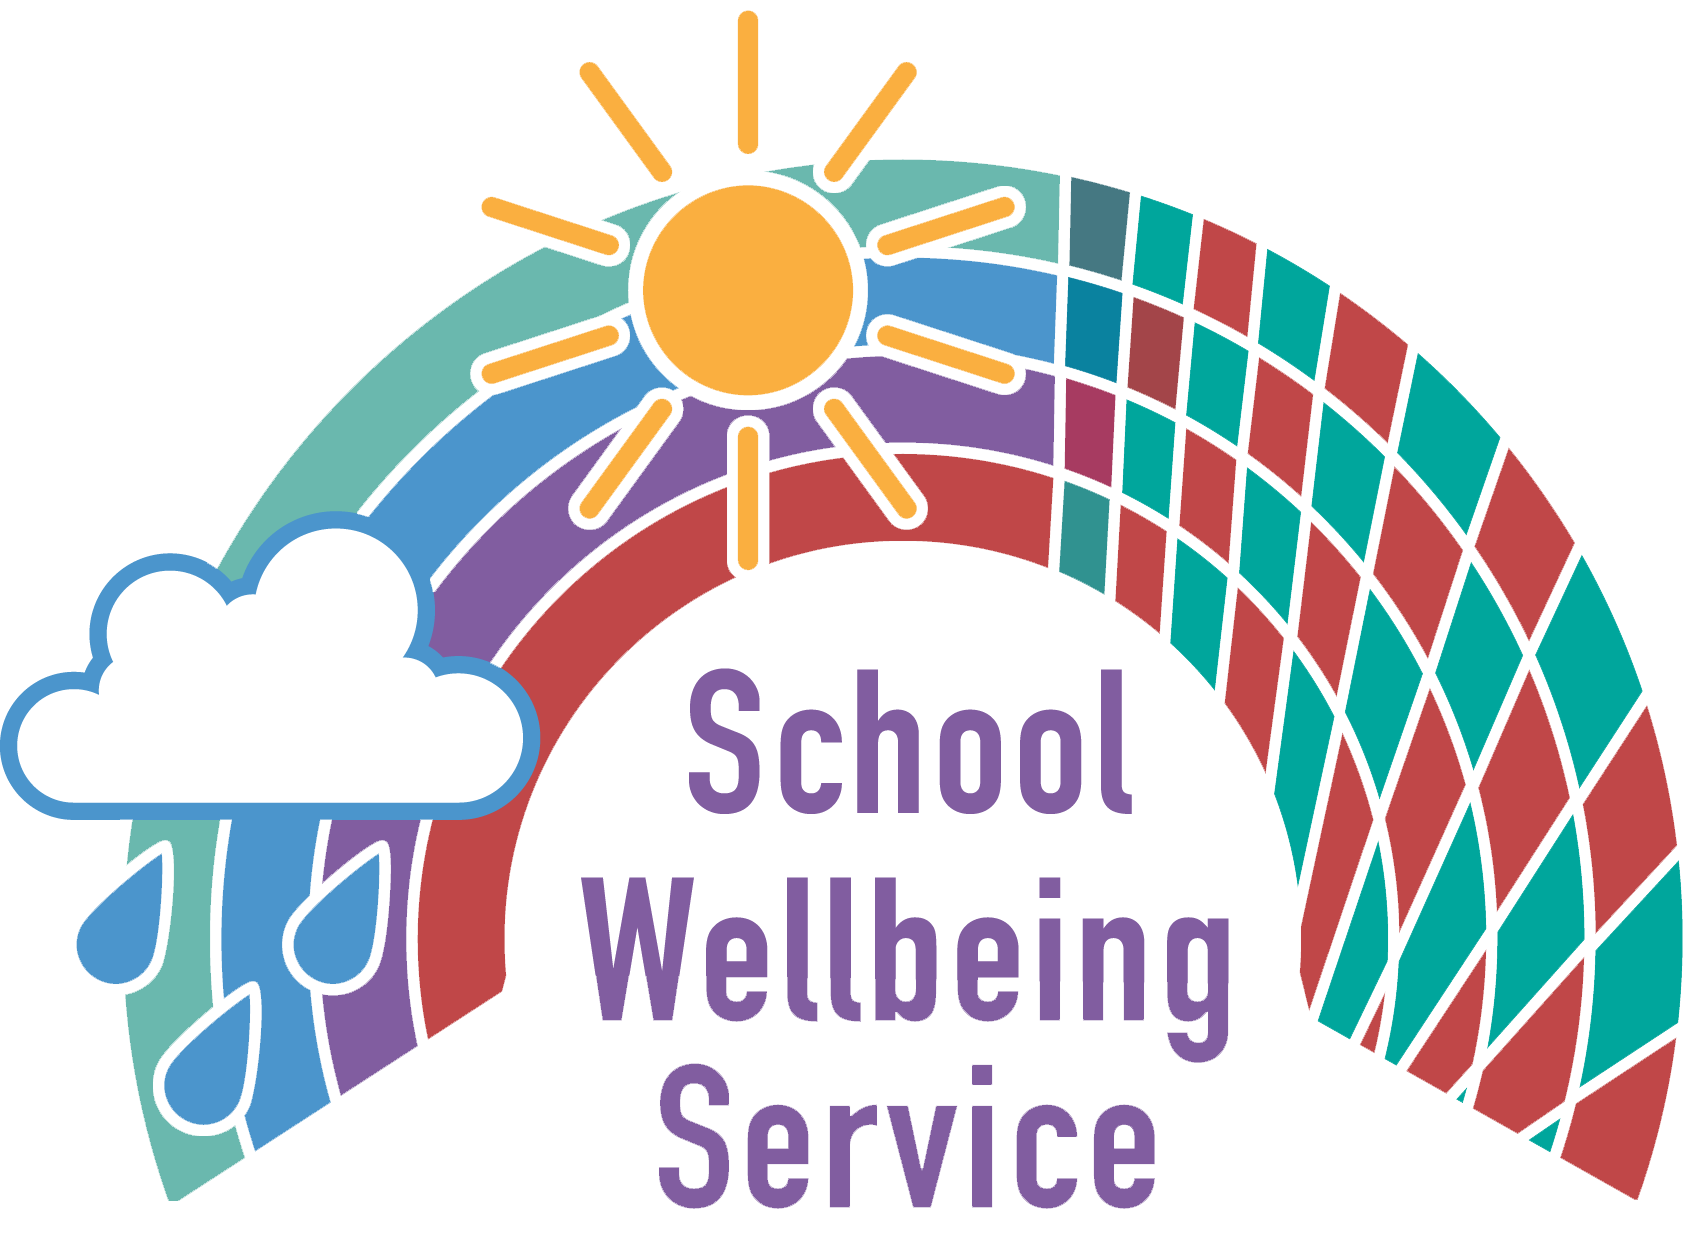 School Wellbeing Services